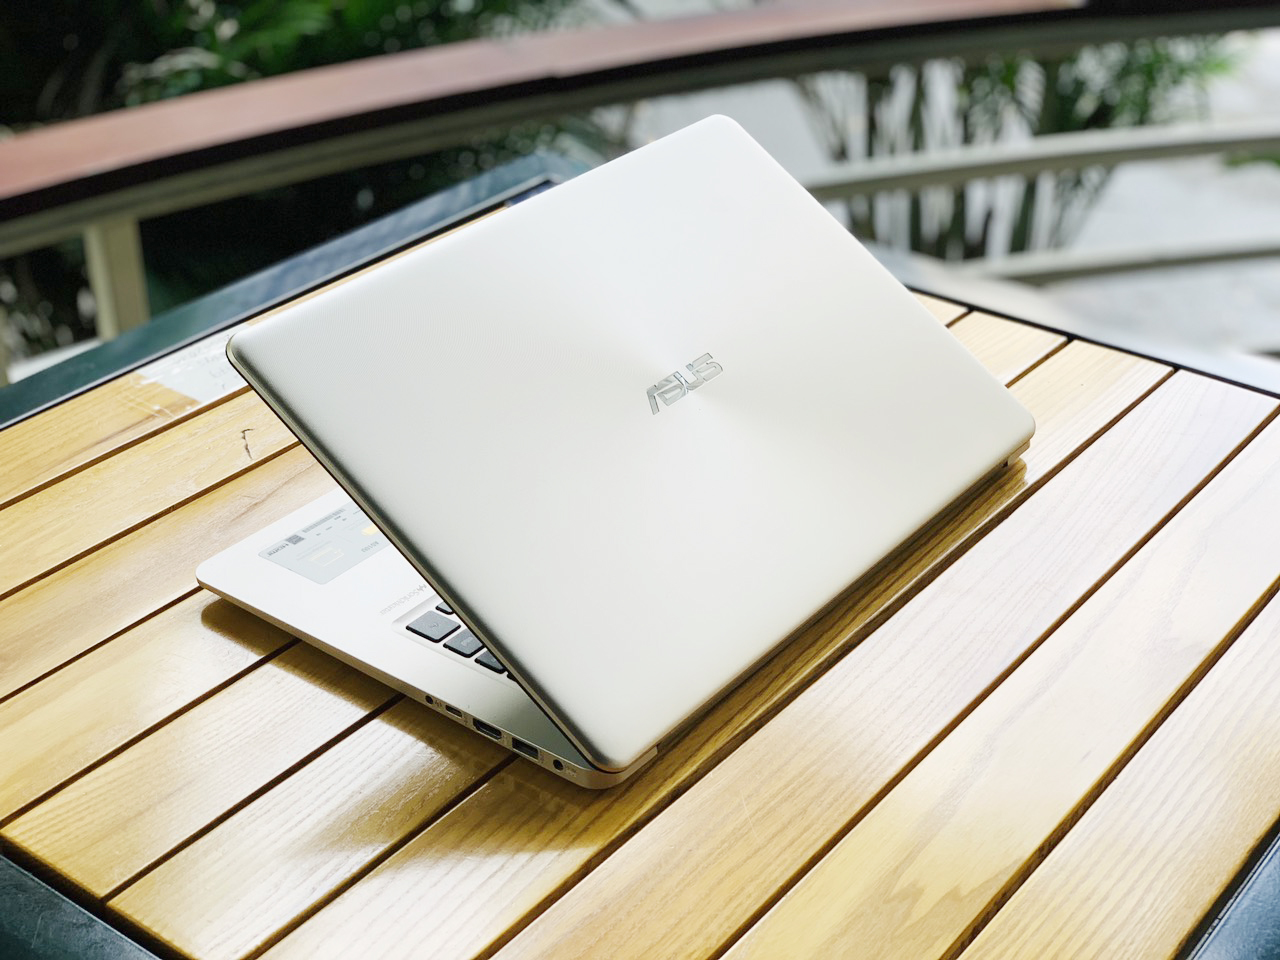 Laptop Asus Vivobook S510U Core i5-8250U Ram 4GB HDD 1TB Vga Nvidia 940MX 15.6 inch Full HD Thế Hệ 8